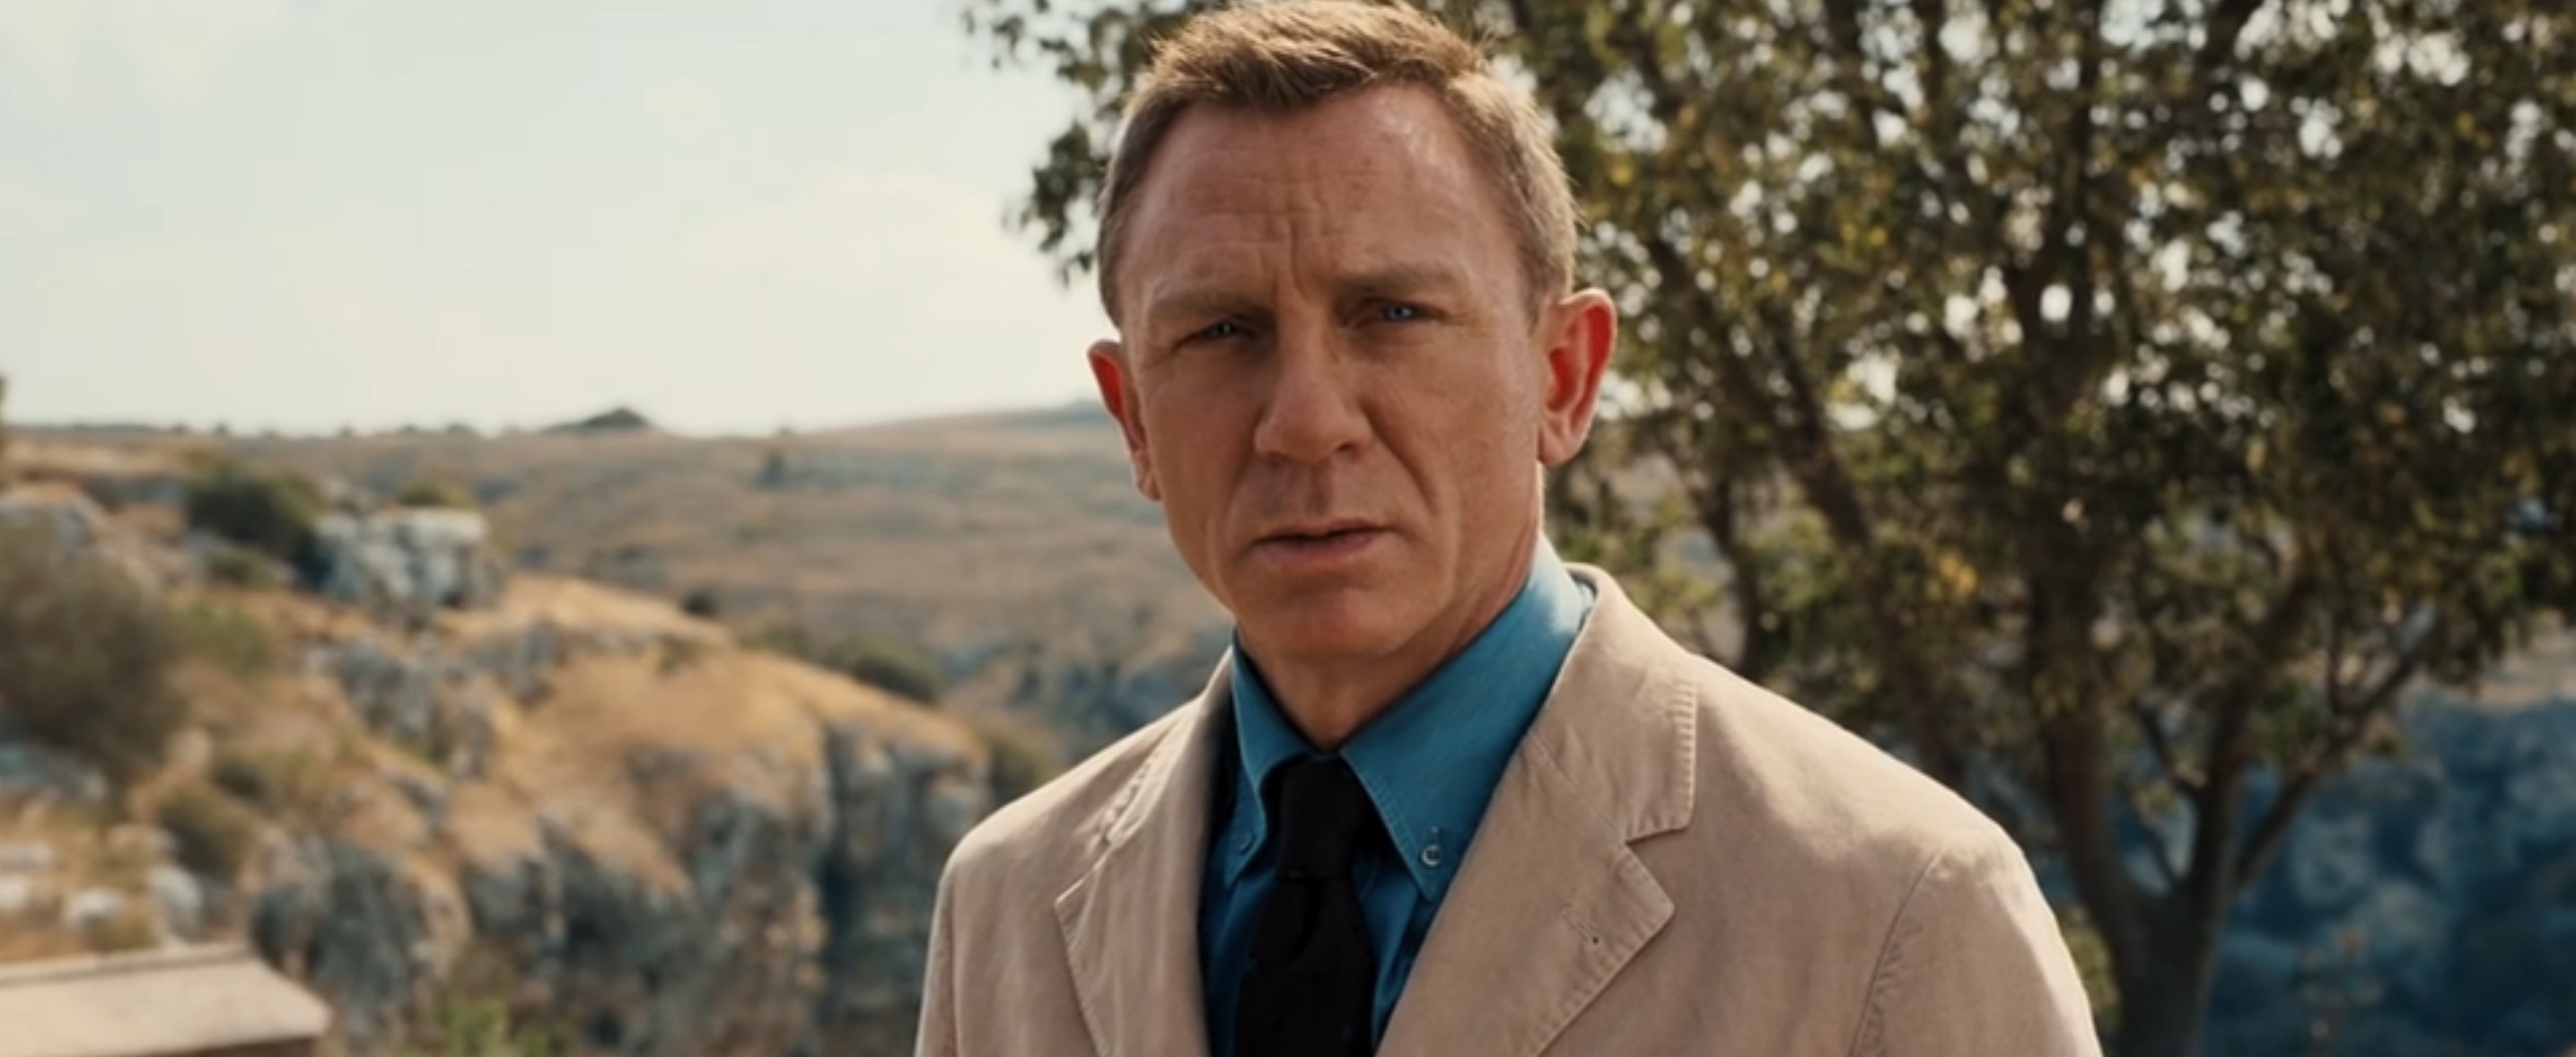 No Time to Die Cast - Daniel Craig as James Bond